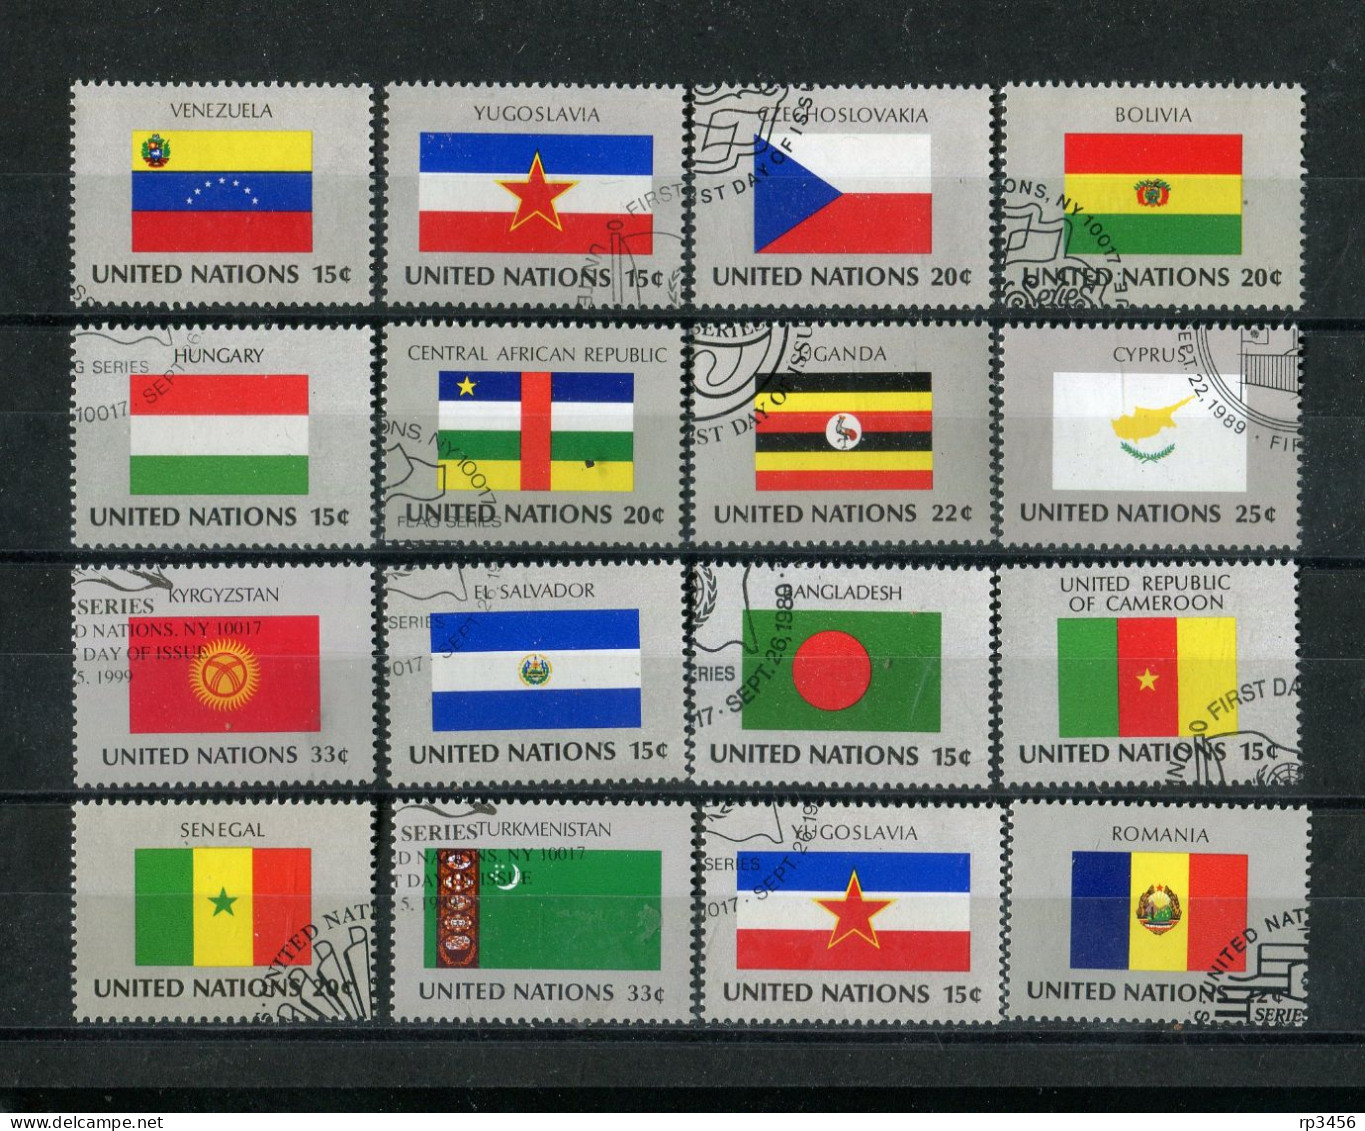 "WELTWEIT" Sammlung "UNO-Flaggen" gestempelt, vgl. Fotos (7429)